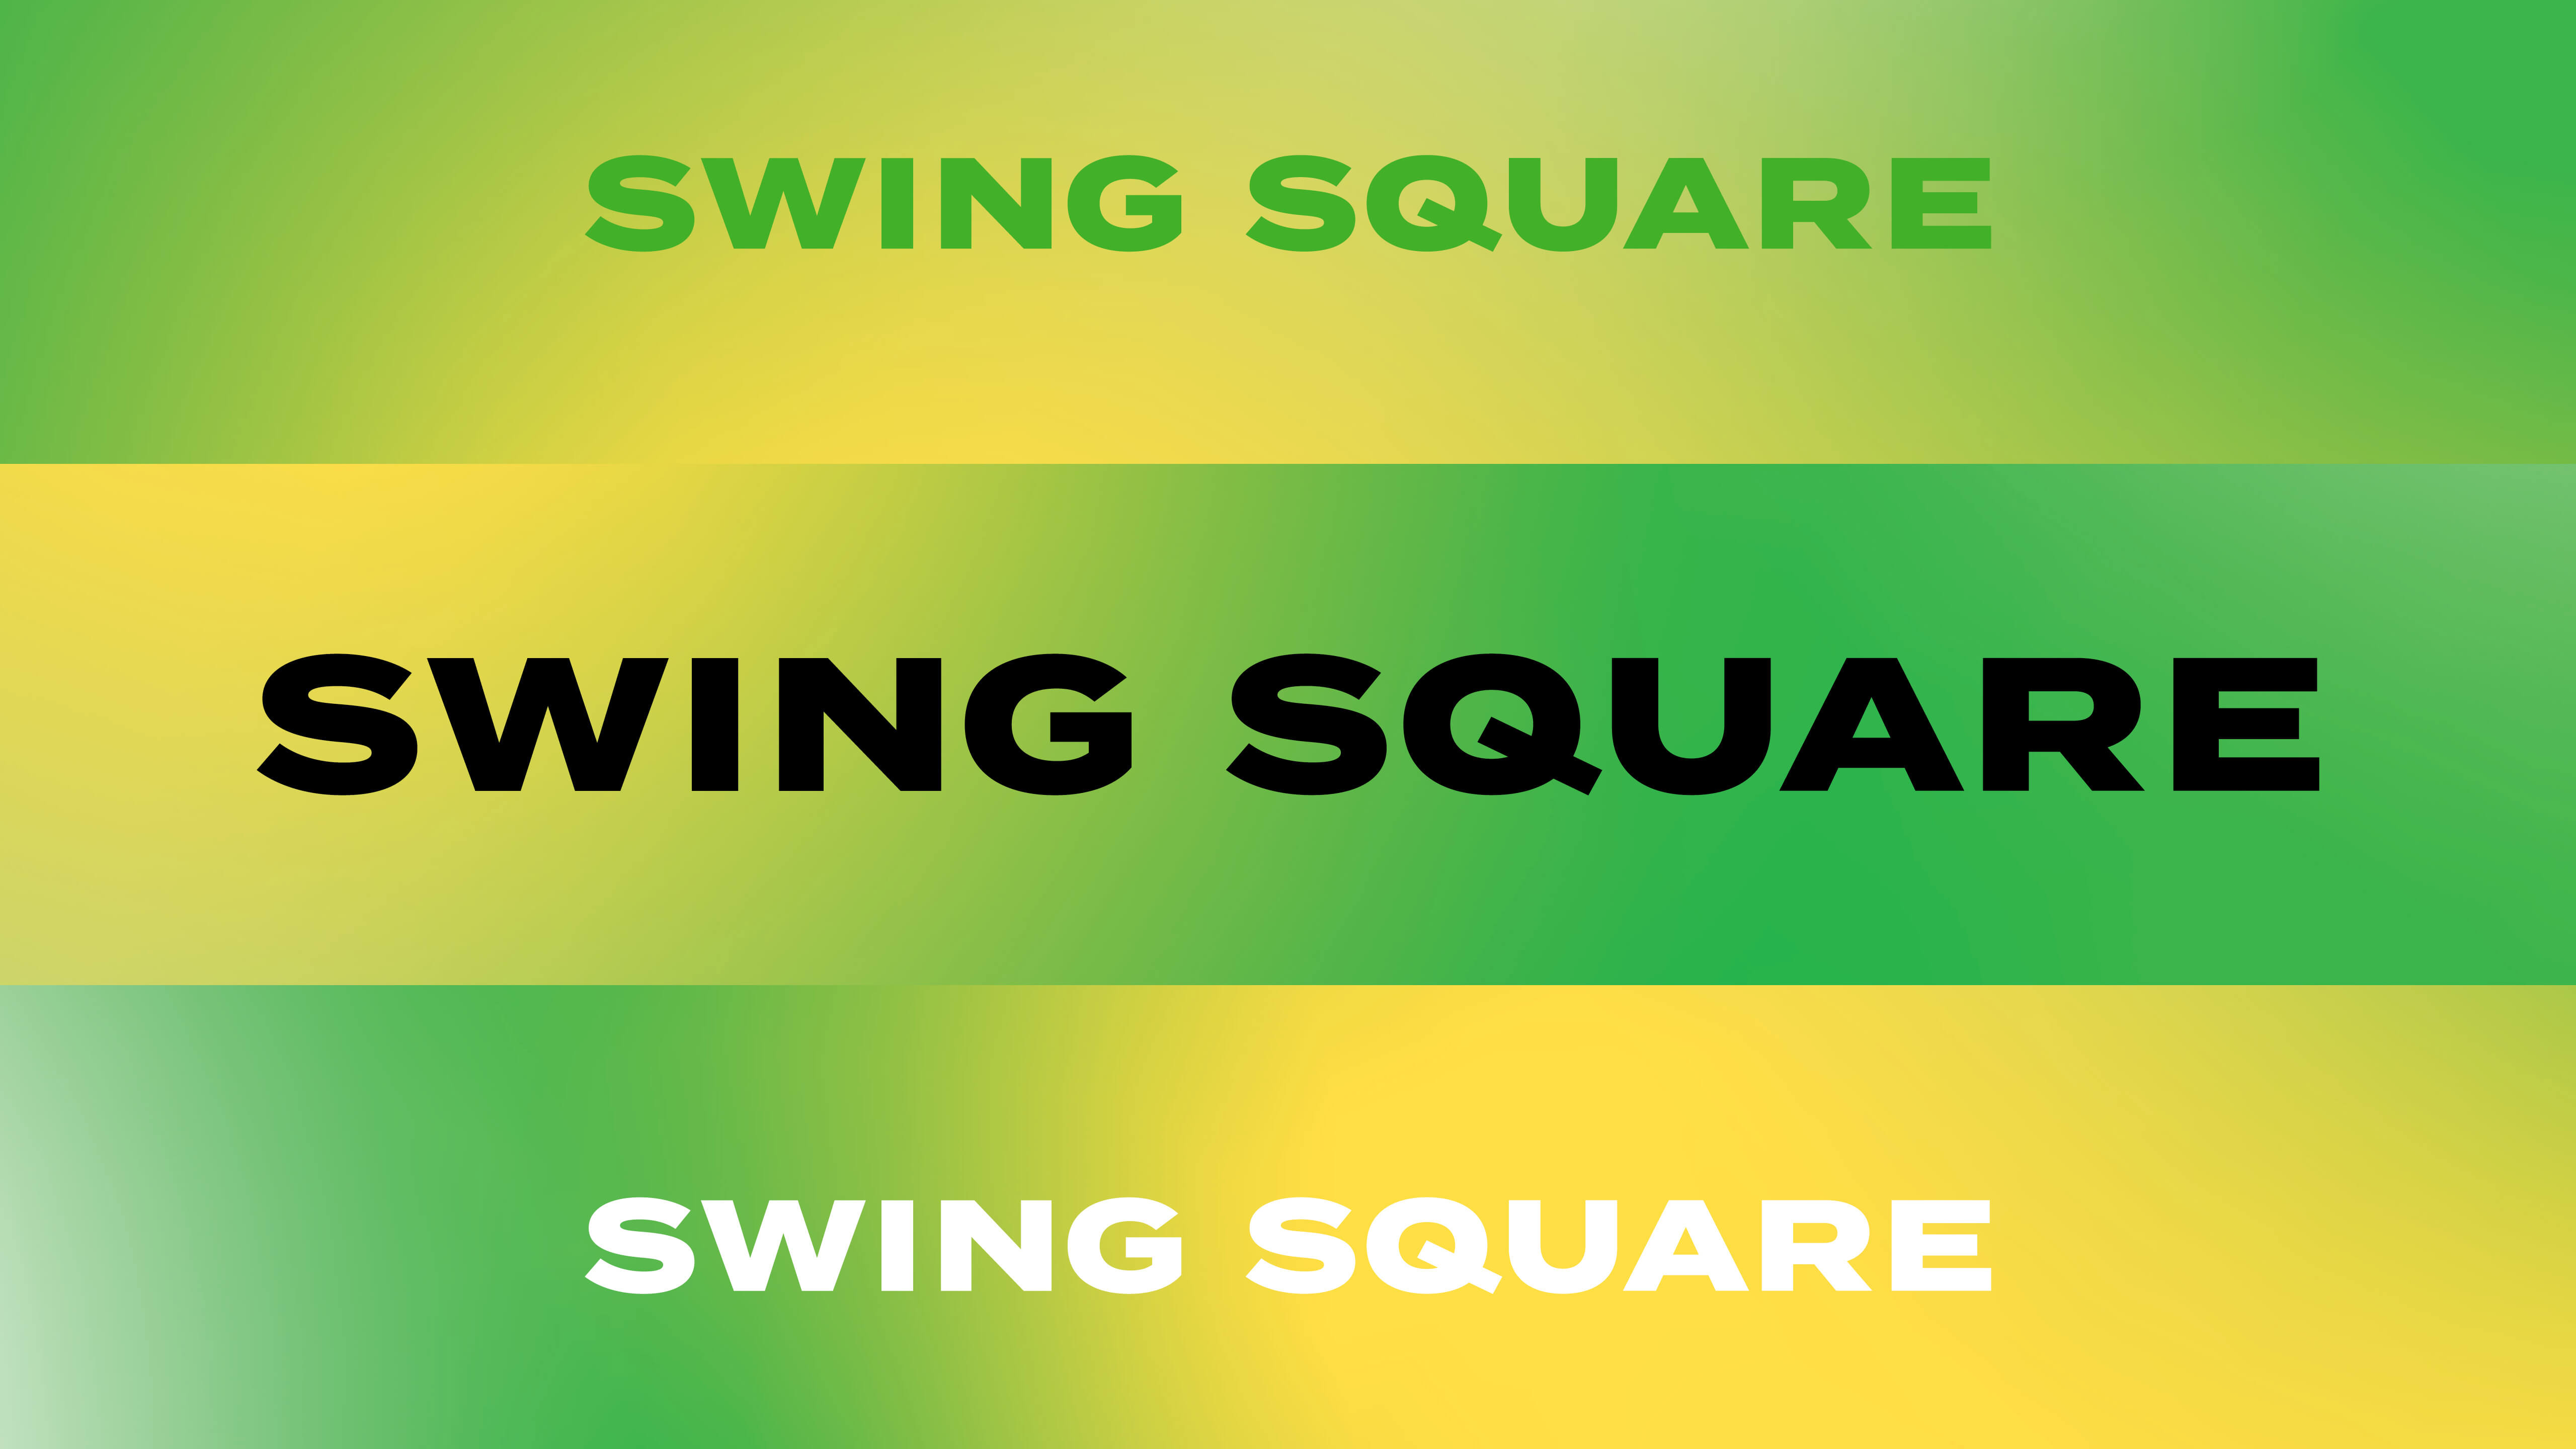 Swing Square - Golf Aid - Branding